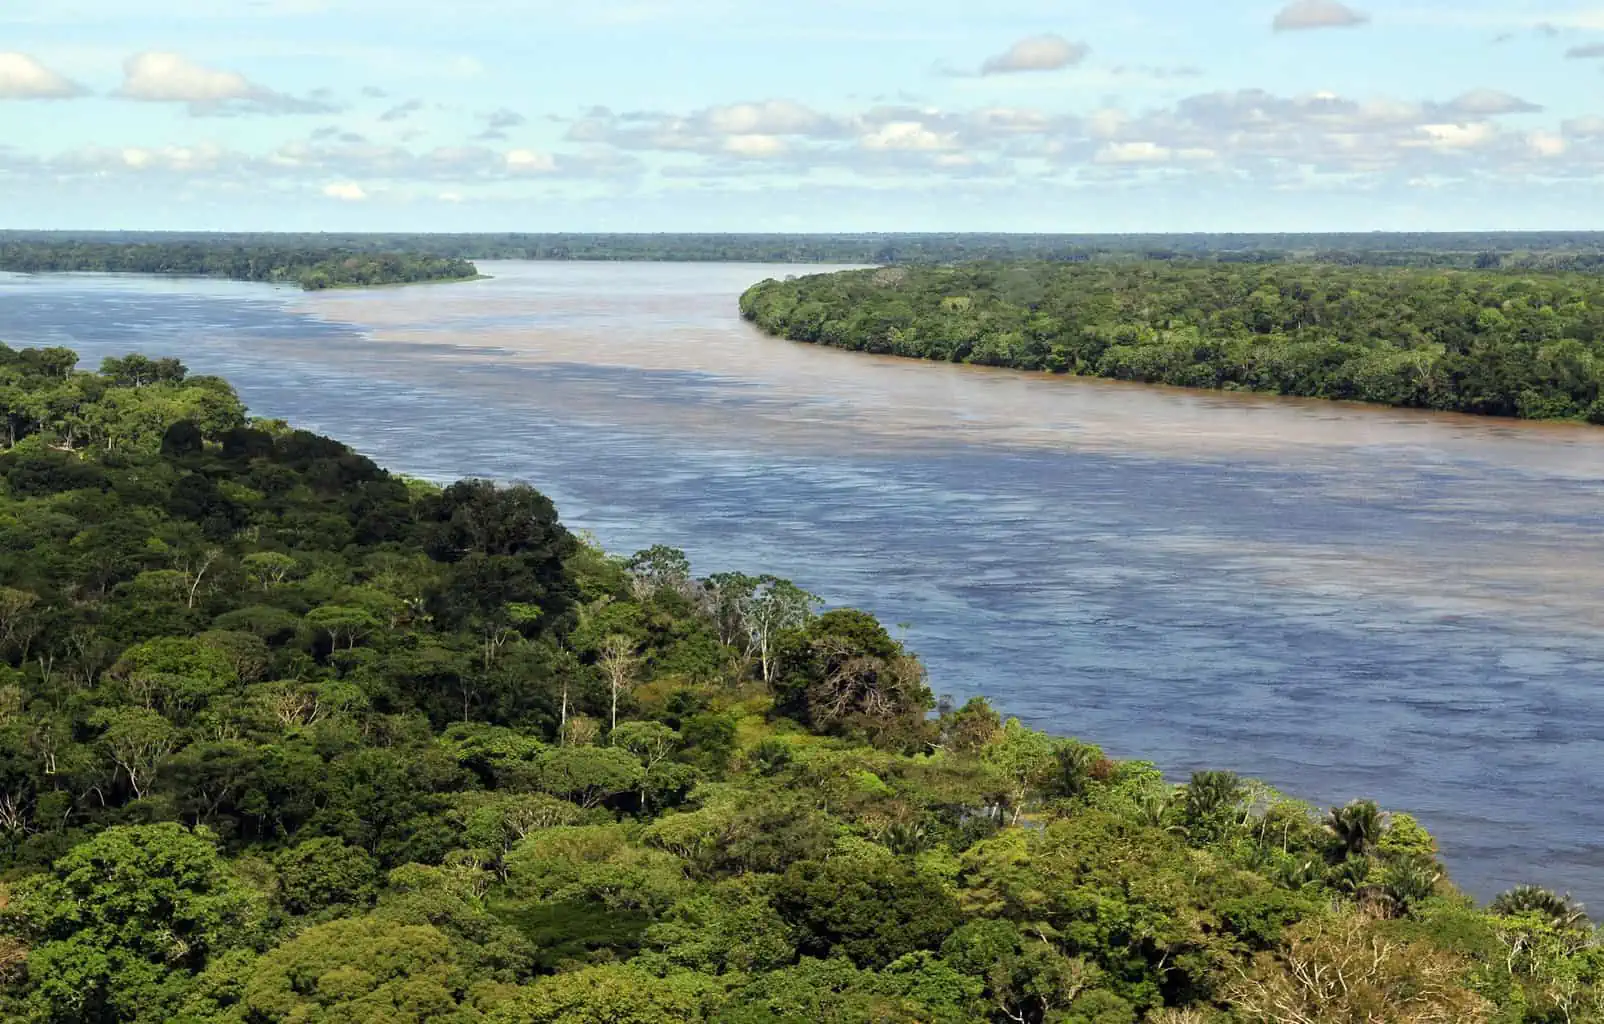 The Amazon Rain Forest